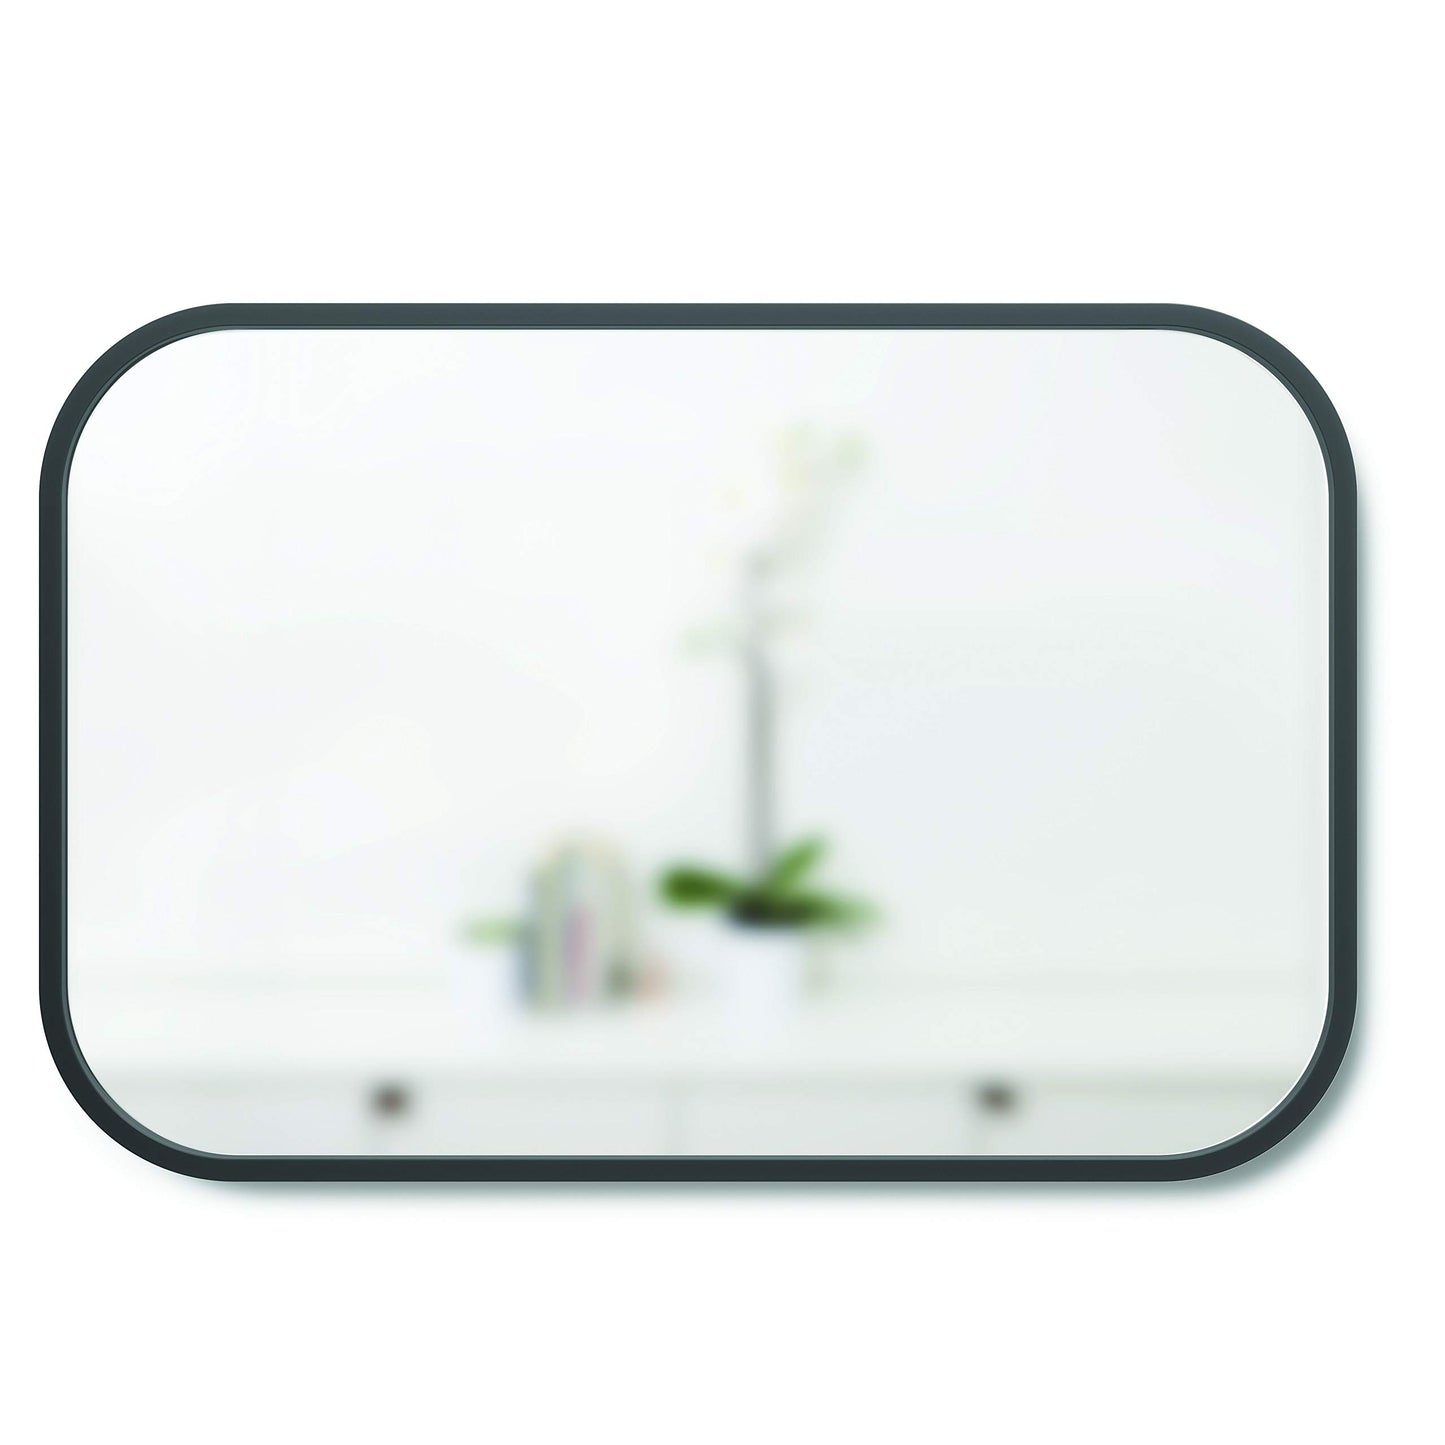 Umbra Hub Rectangular Mirror with Rubber Frame, Modern Decor for Entryways, Washrooms, Living Rooms, 24 x 36, Black